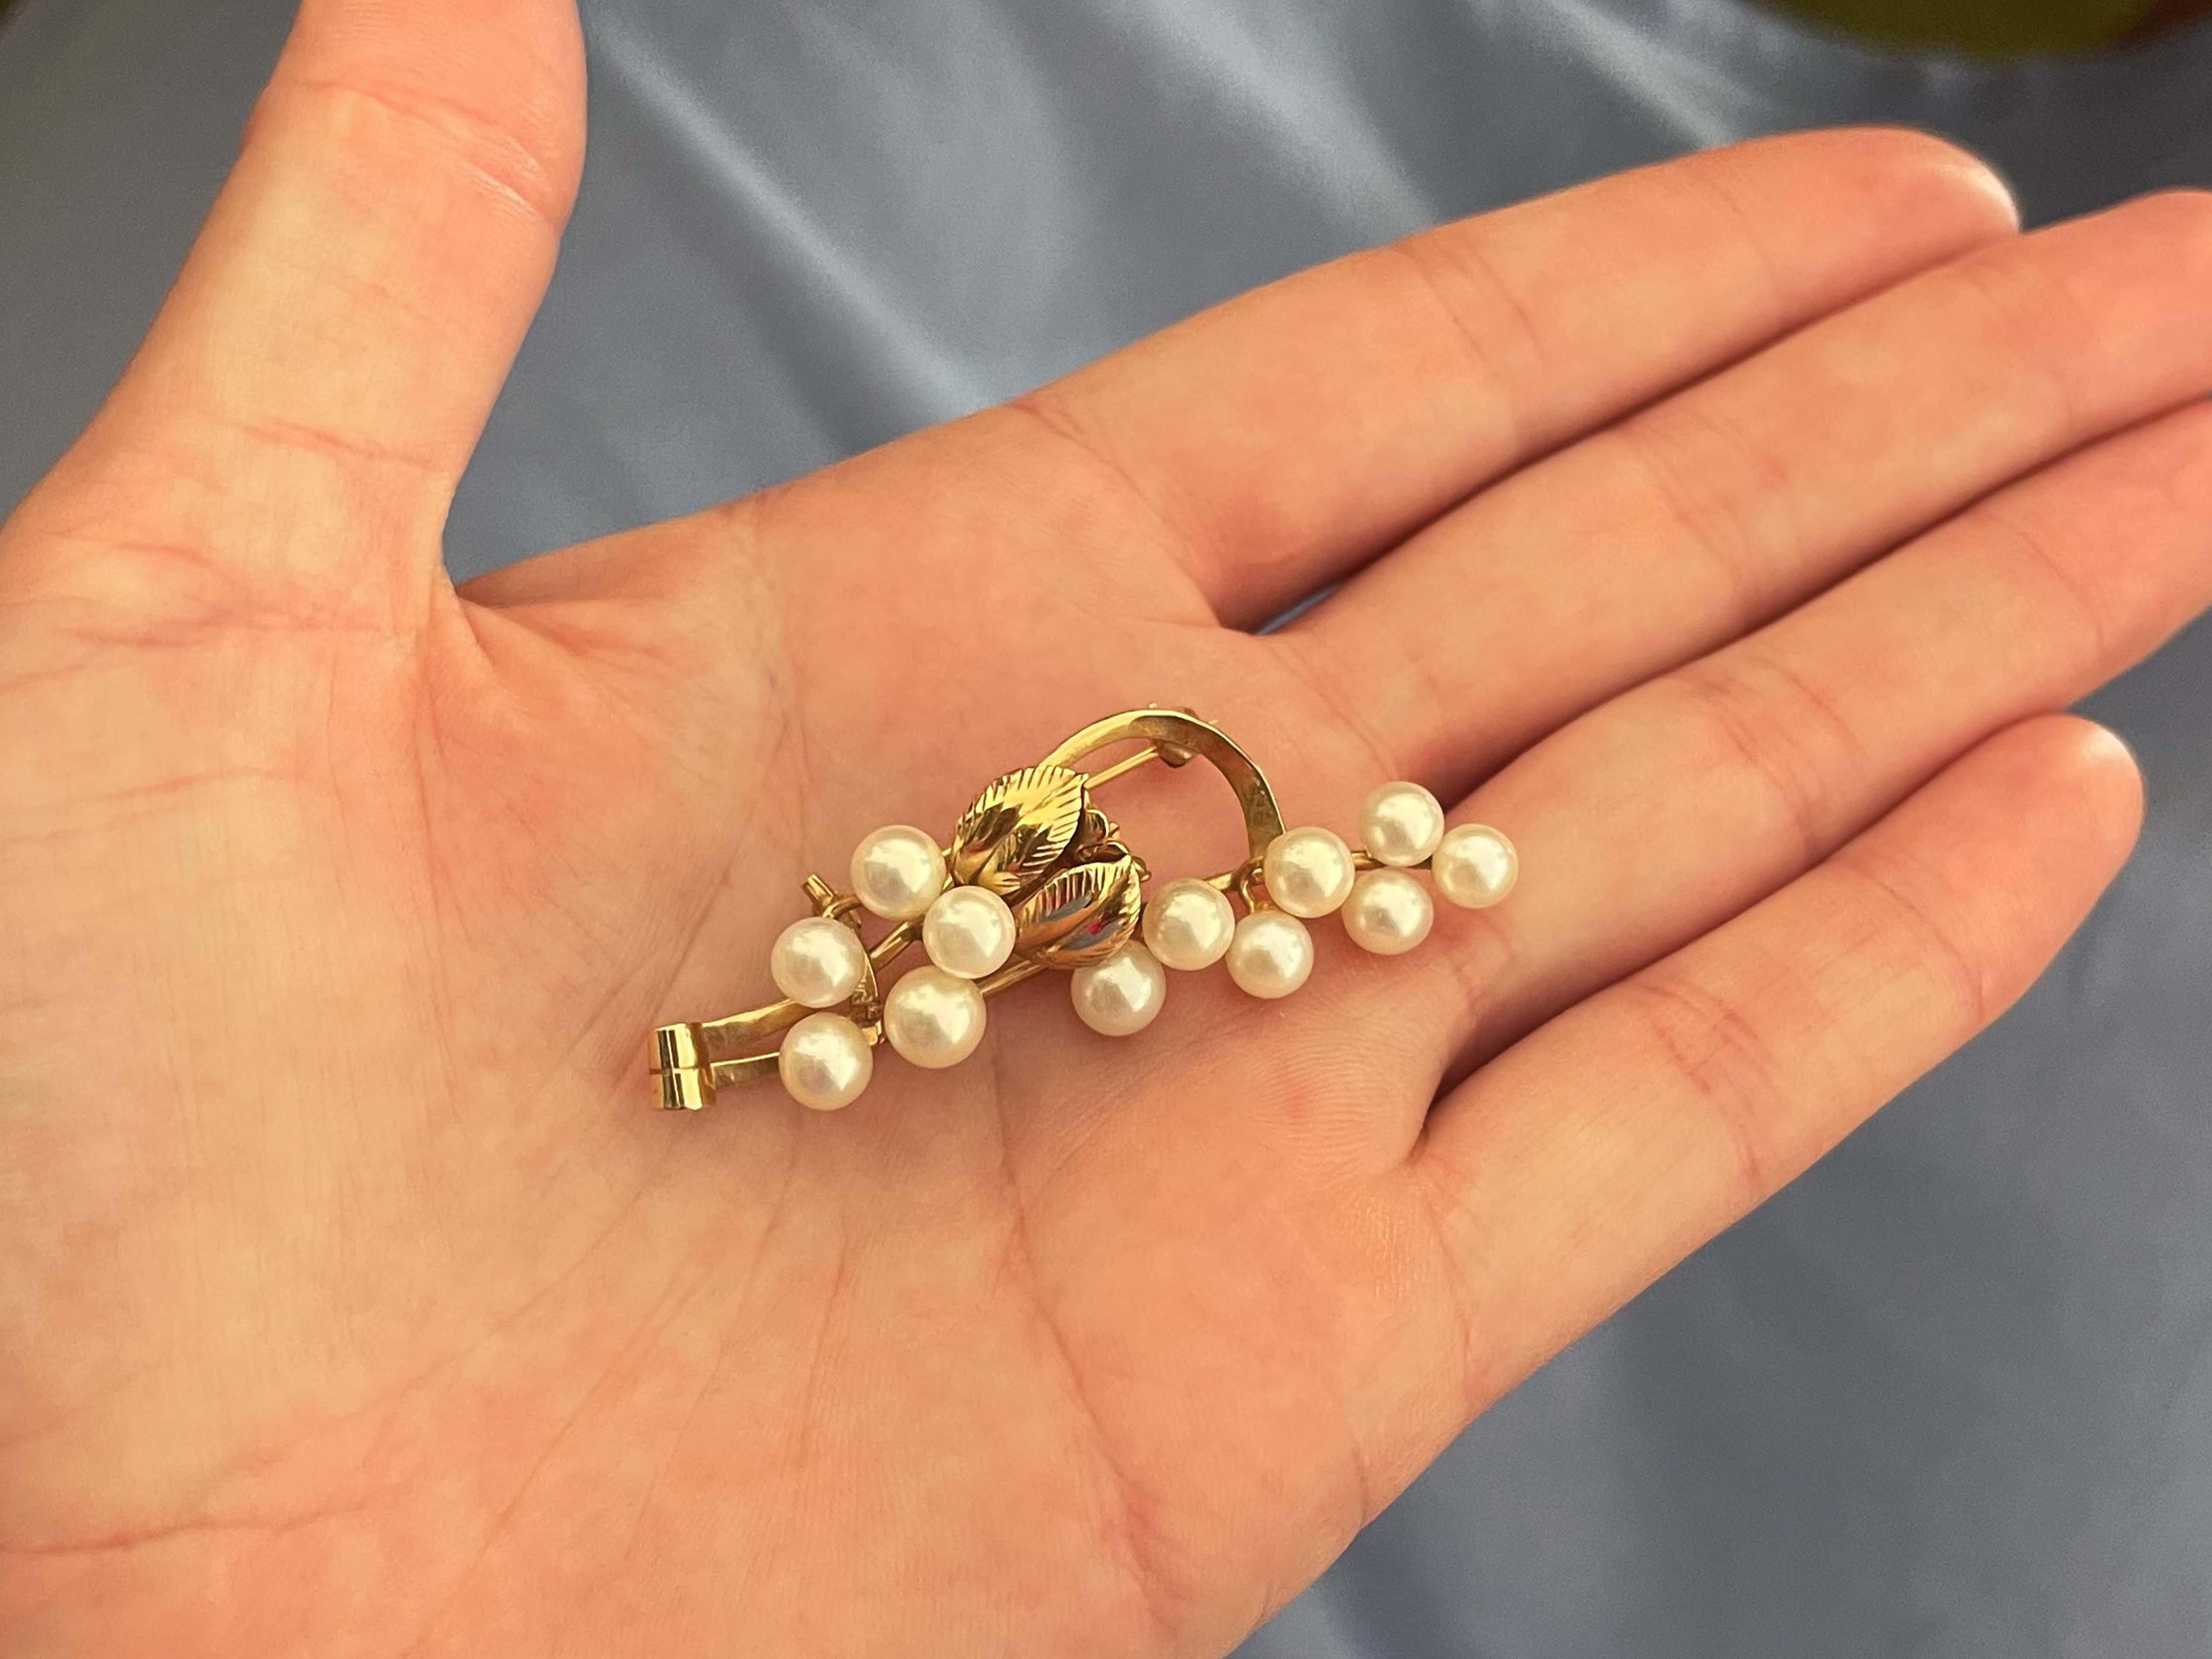 Brooch Specifications:

Designer: Ming's

Metal: 14k Yellow Gold

Pearls: Akoya Pearls

Total Weight: 6.8 Grams

Brooch Measurements: 2